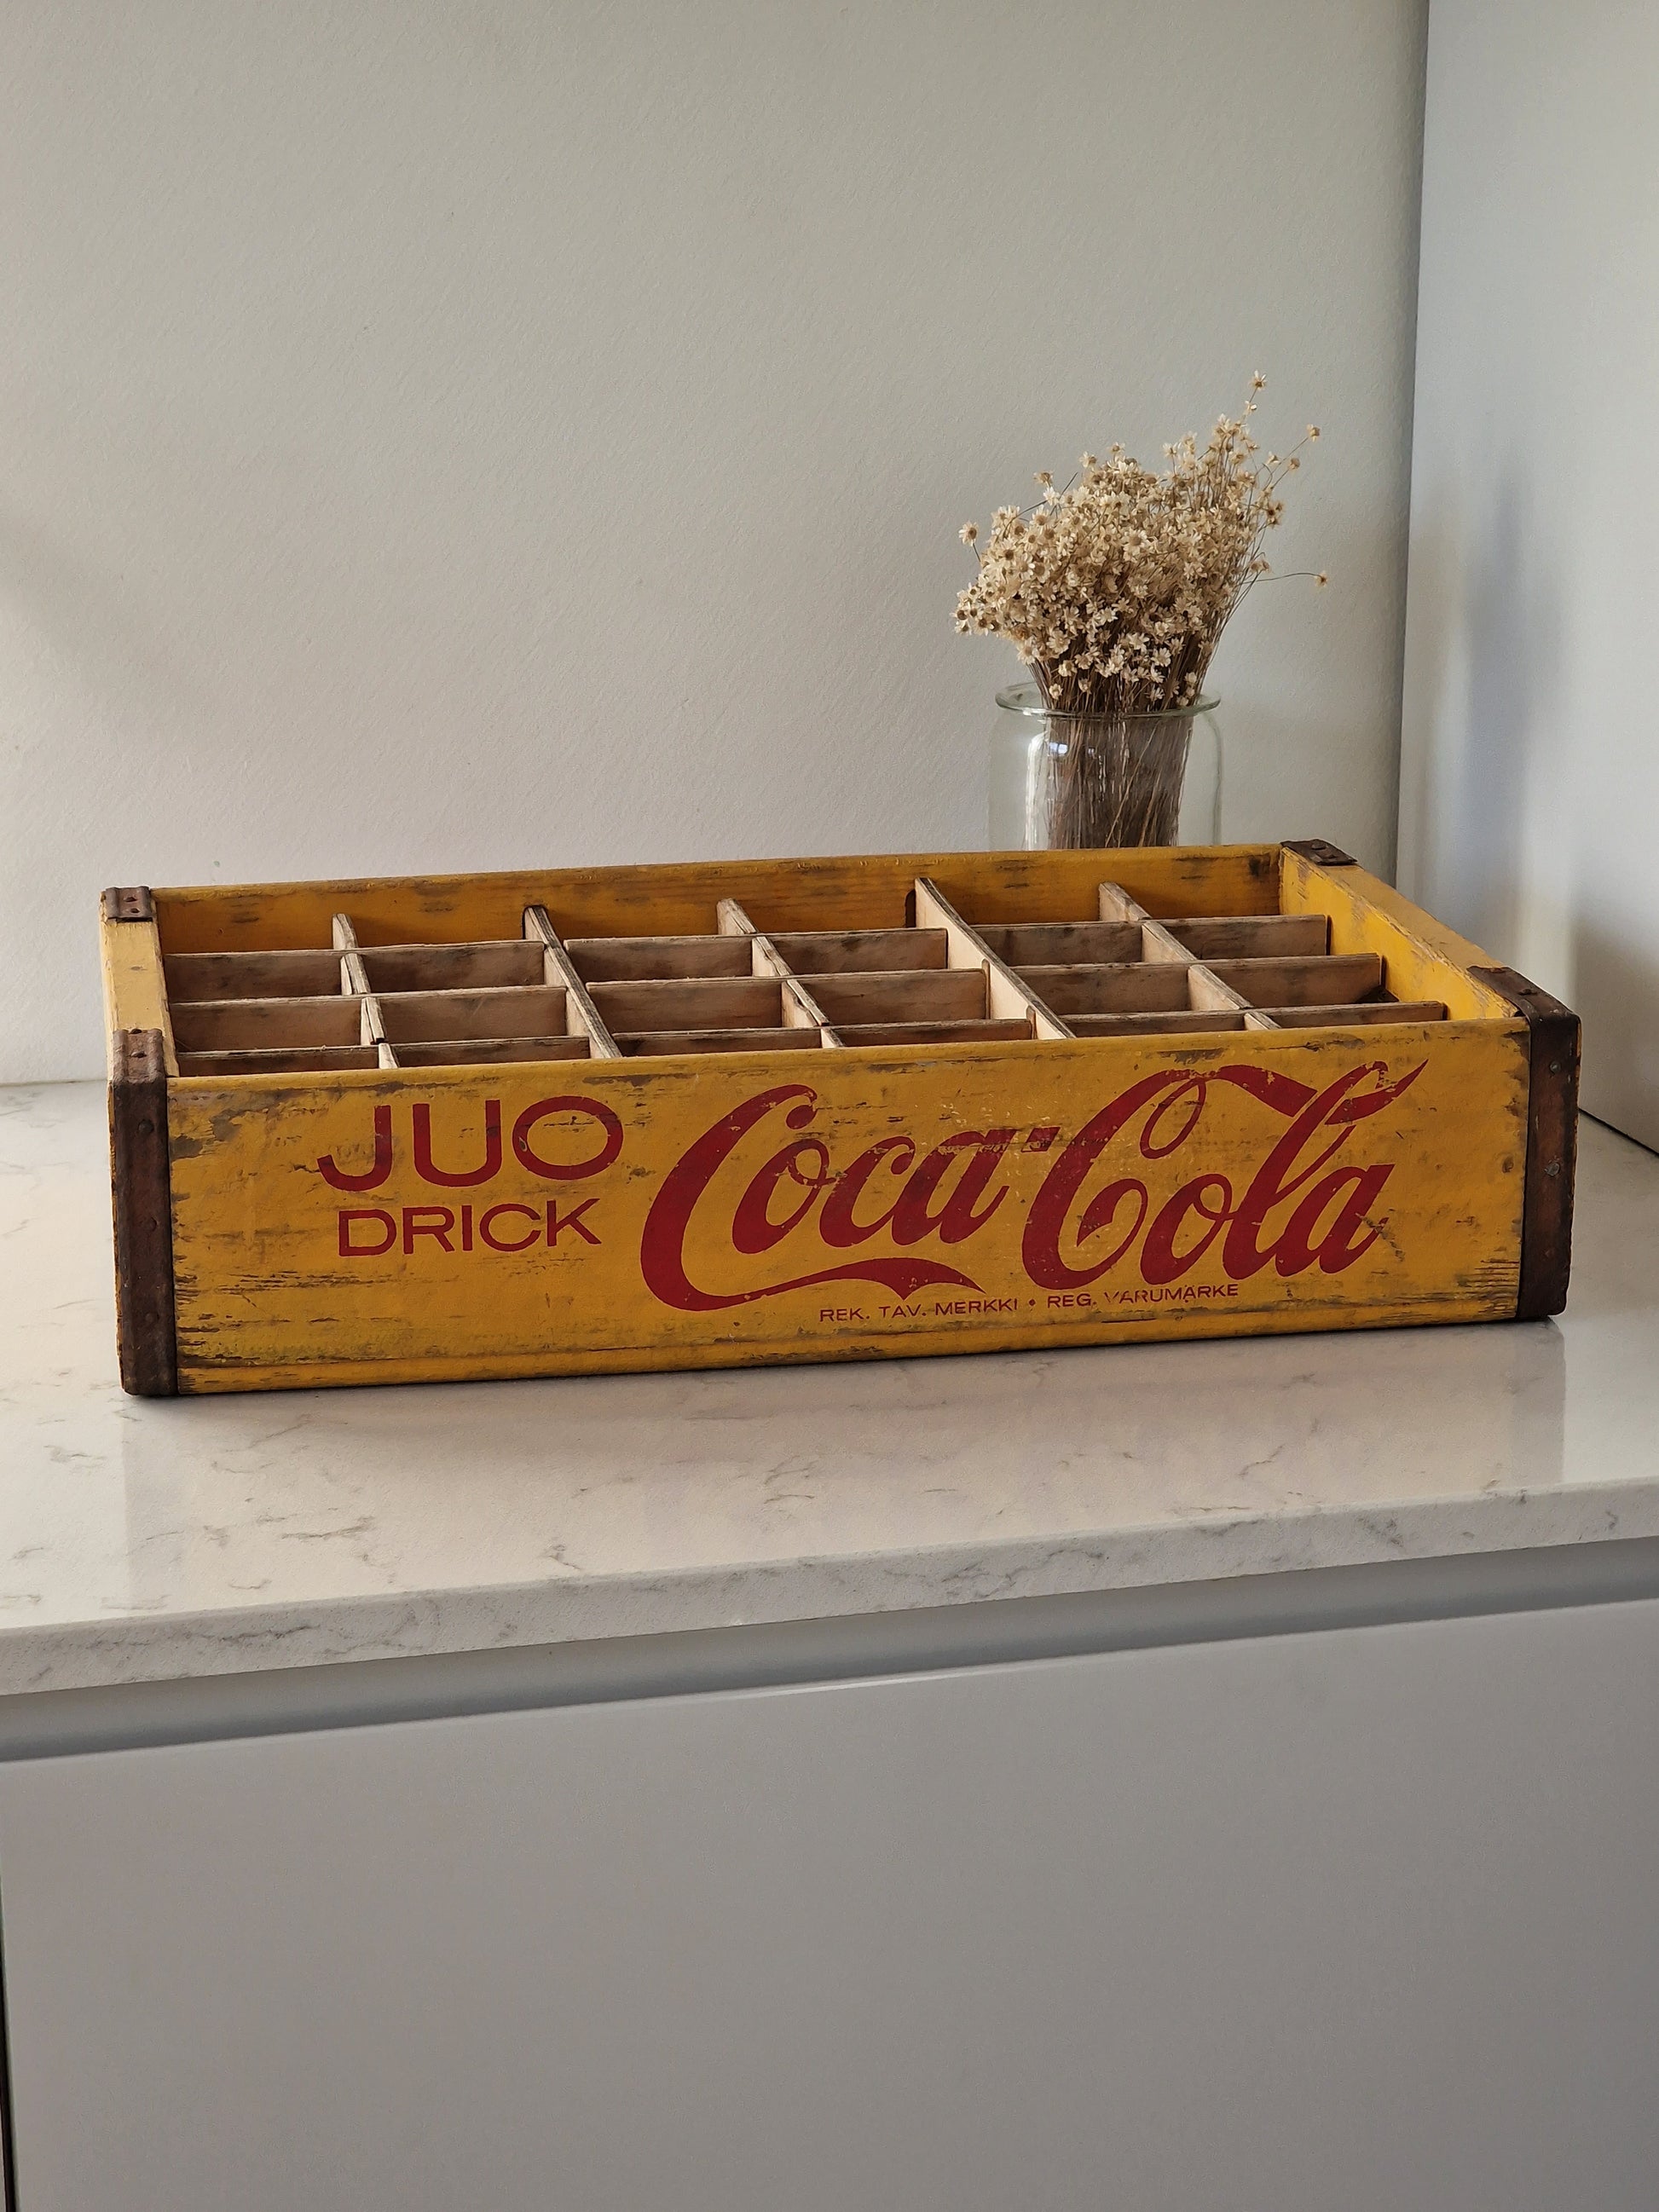 Vanha Coca-Cola juomakori